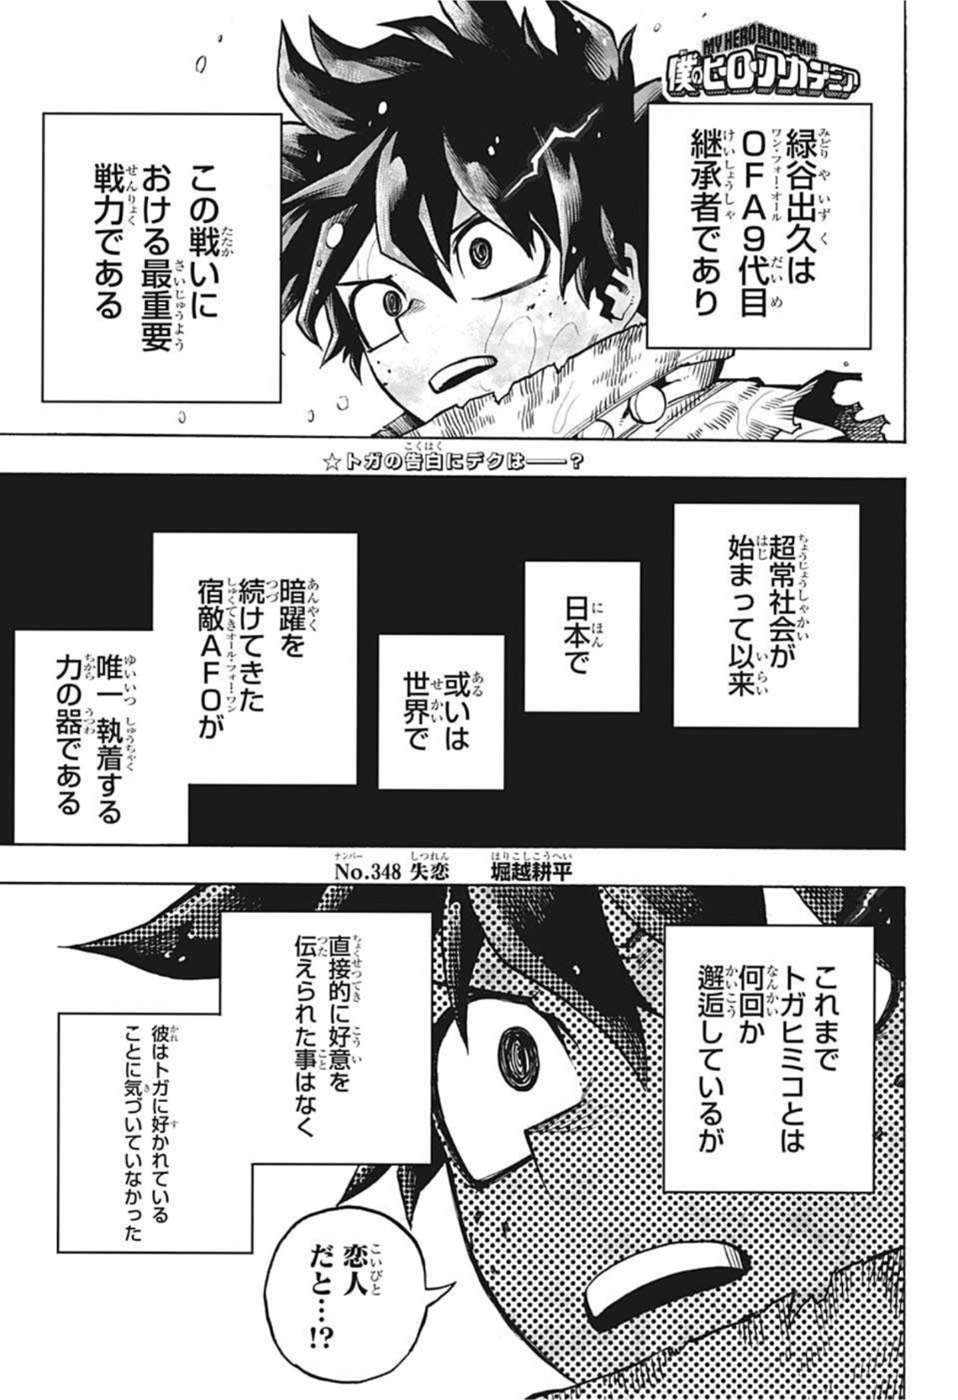 Boku no Hero Academia - Chapter 348 - Page 1